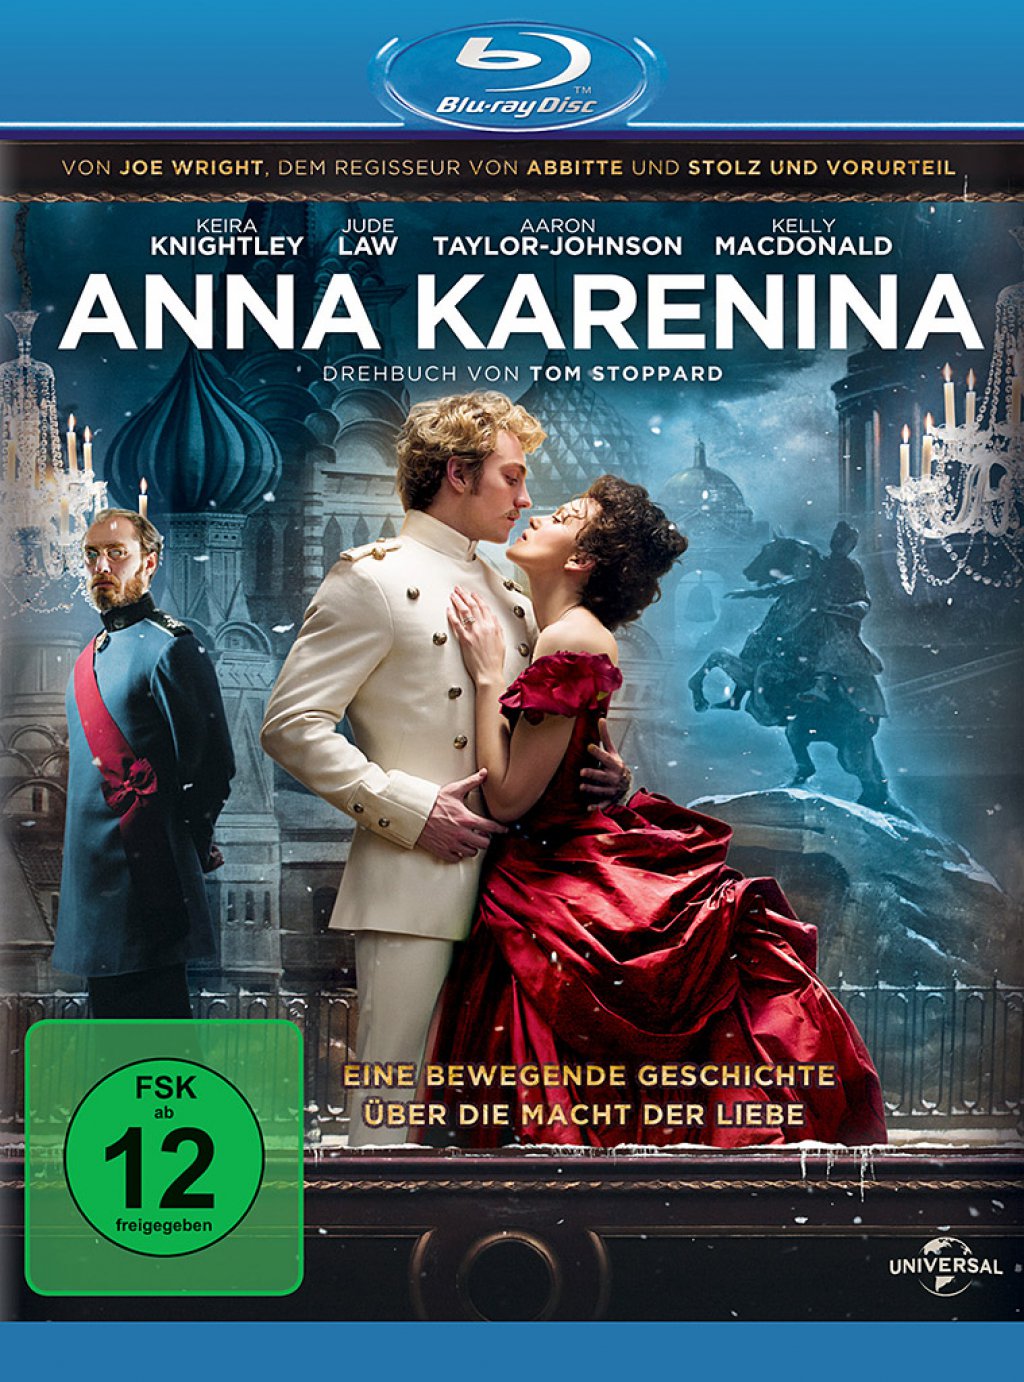 download the new Anna Karenina